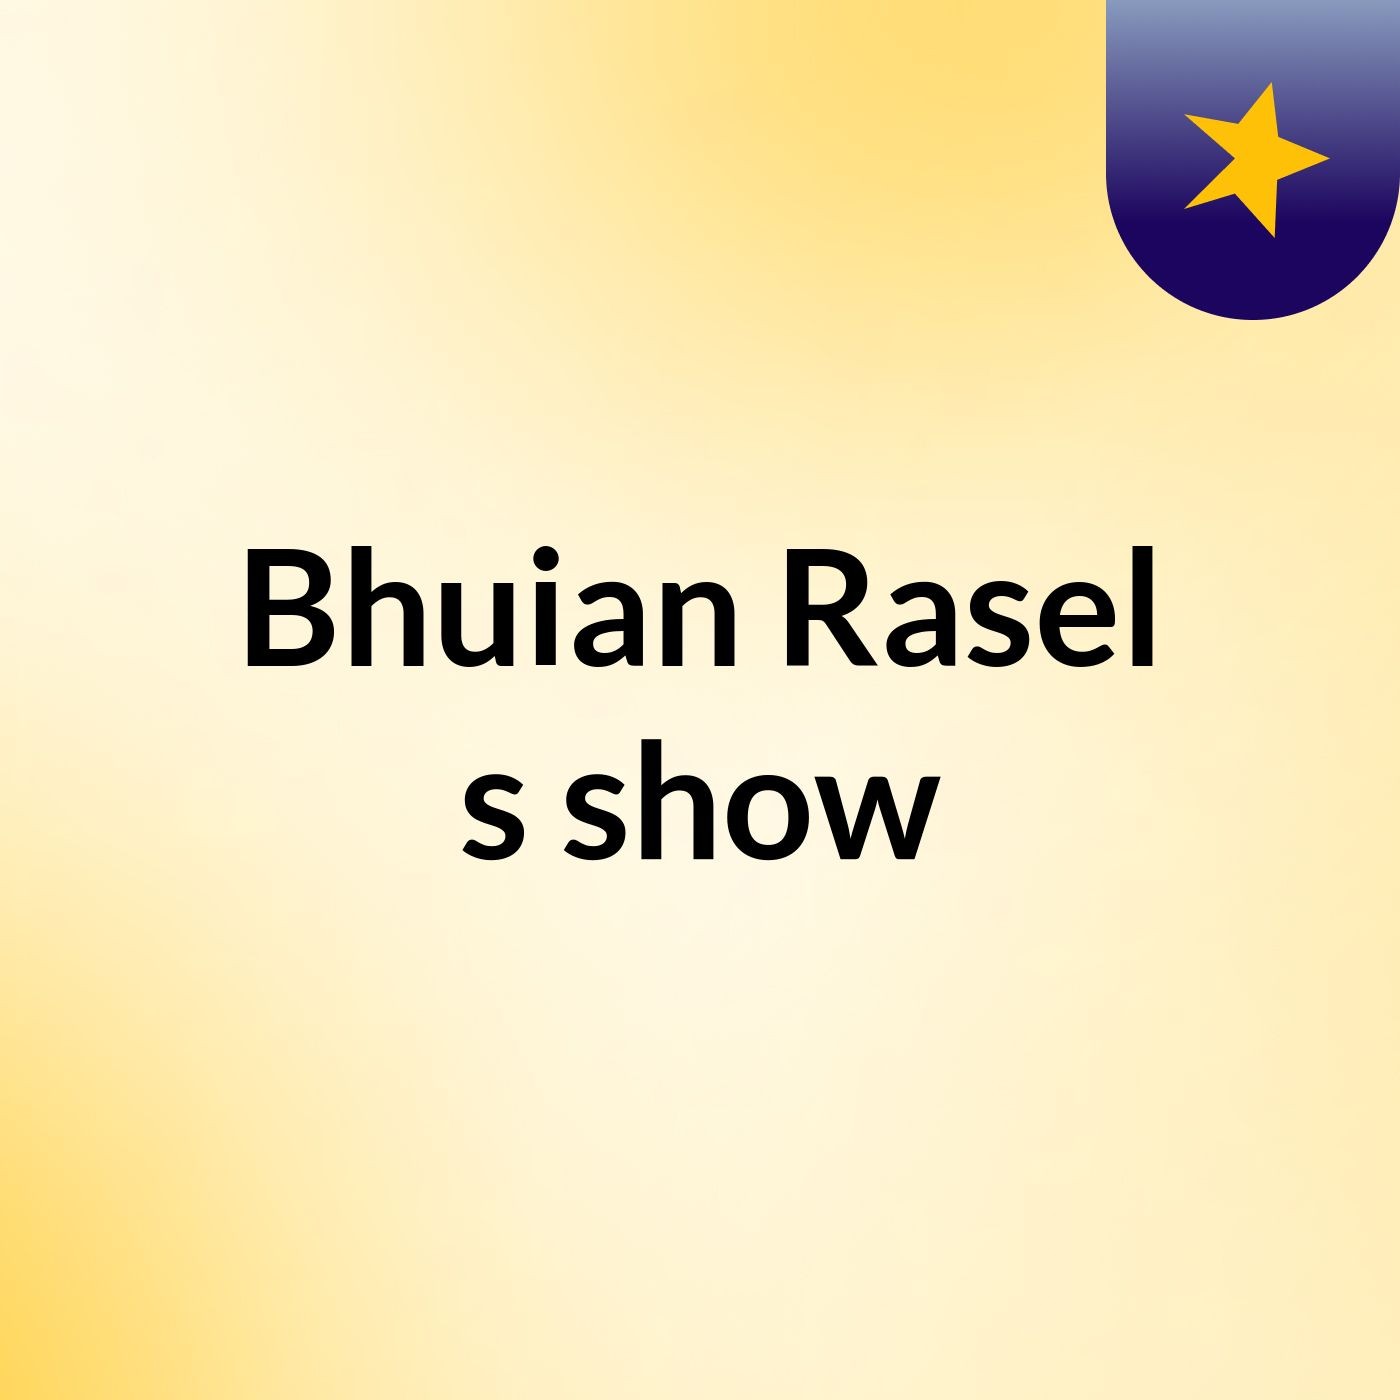 Episode 3 - Bhuian Rasel's show